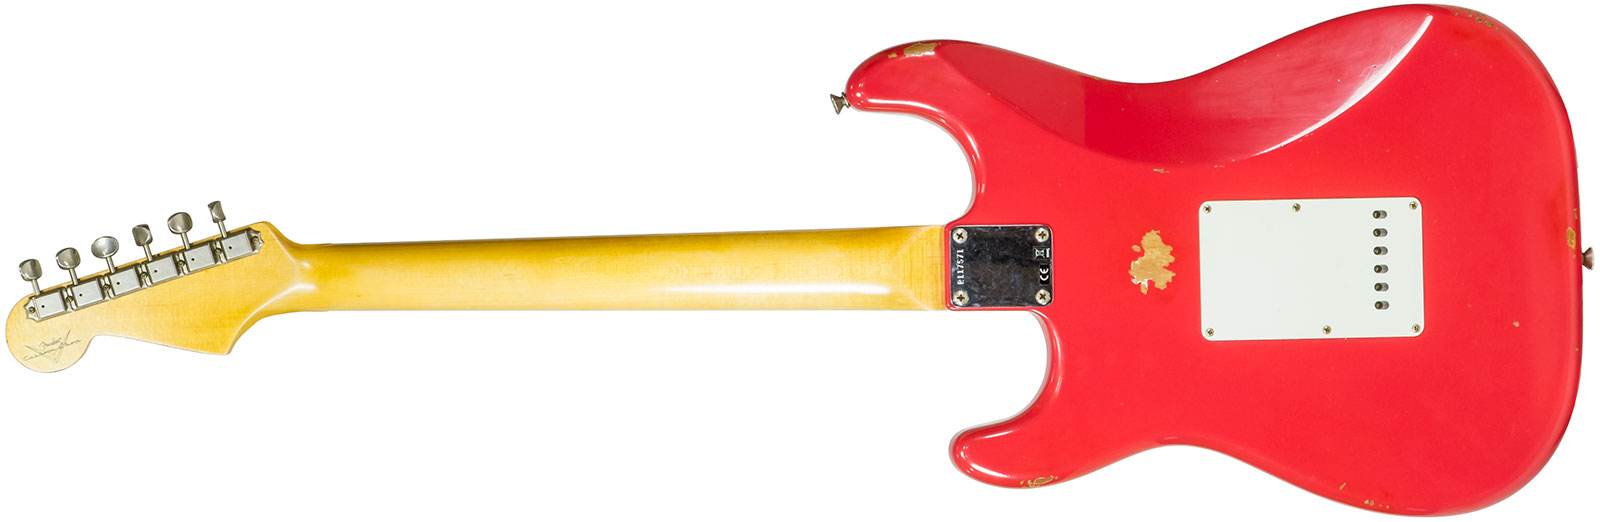 Fender Custom Shop Strat 1963 3s Trem Rw #r117571 - Relic Fiesta Red - Str shape electric guitar - Variation 1